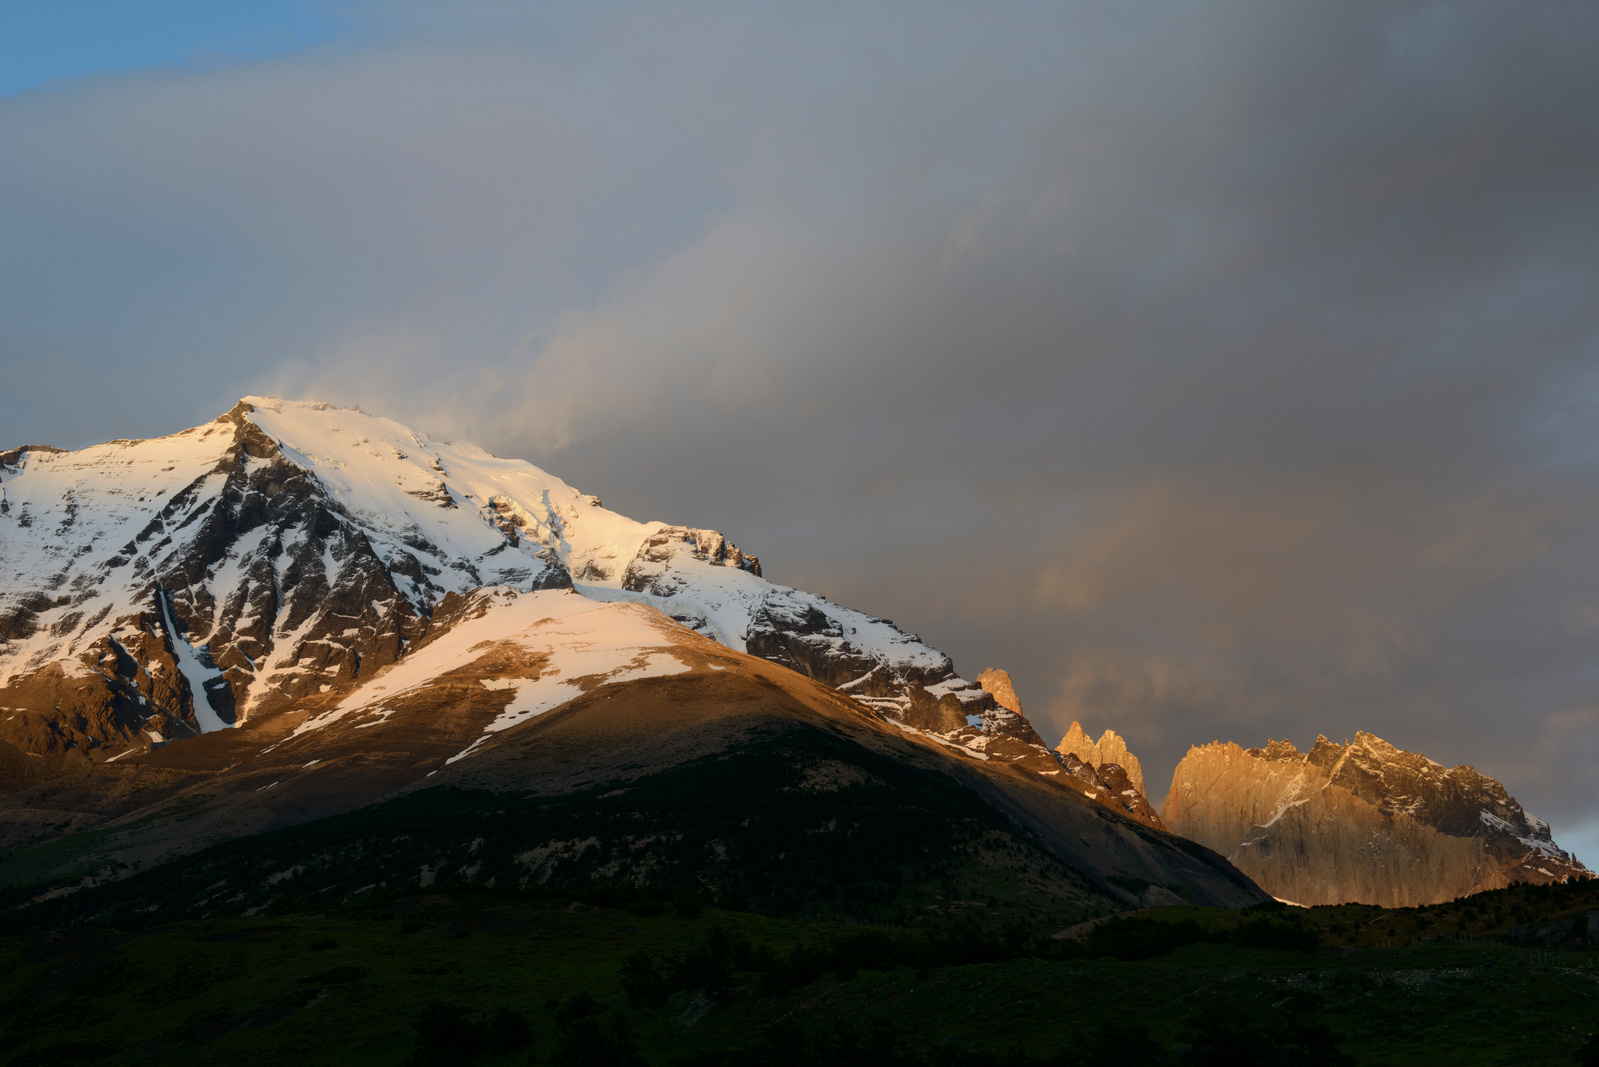 Almirante Nieto mountain in Patagonia by the Hotel Las Torres, Chile